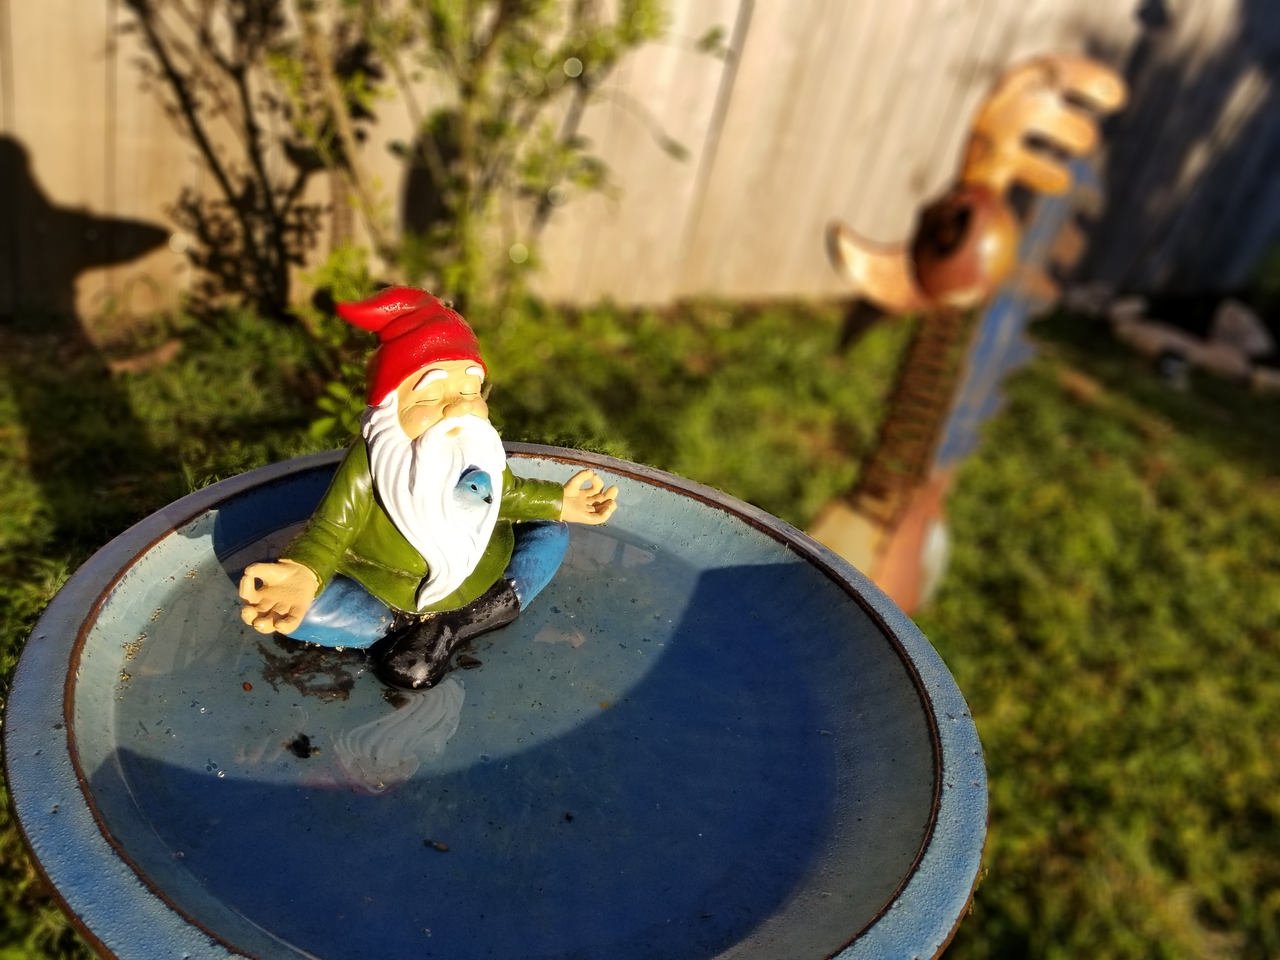 A garden gnome watches over the birdfeeder.